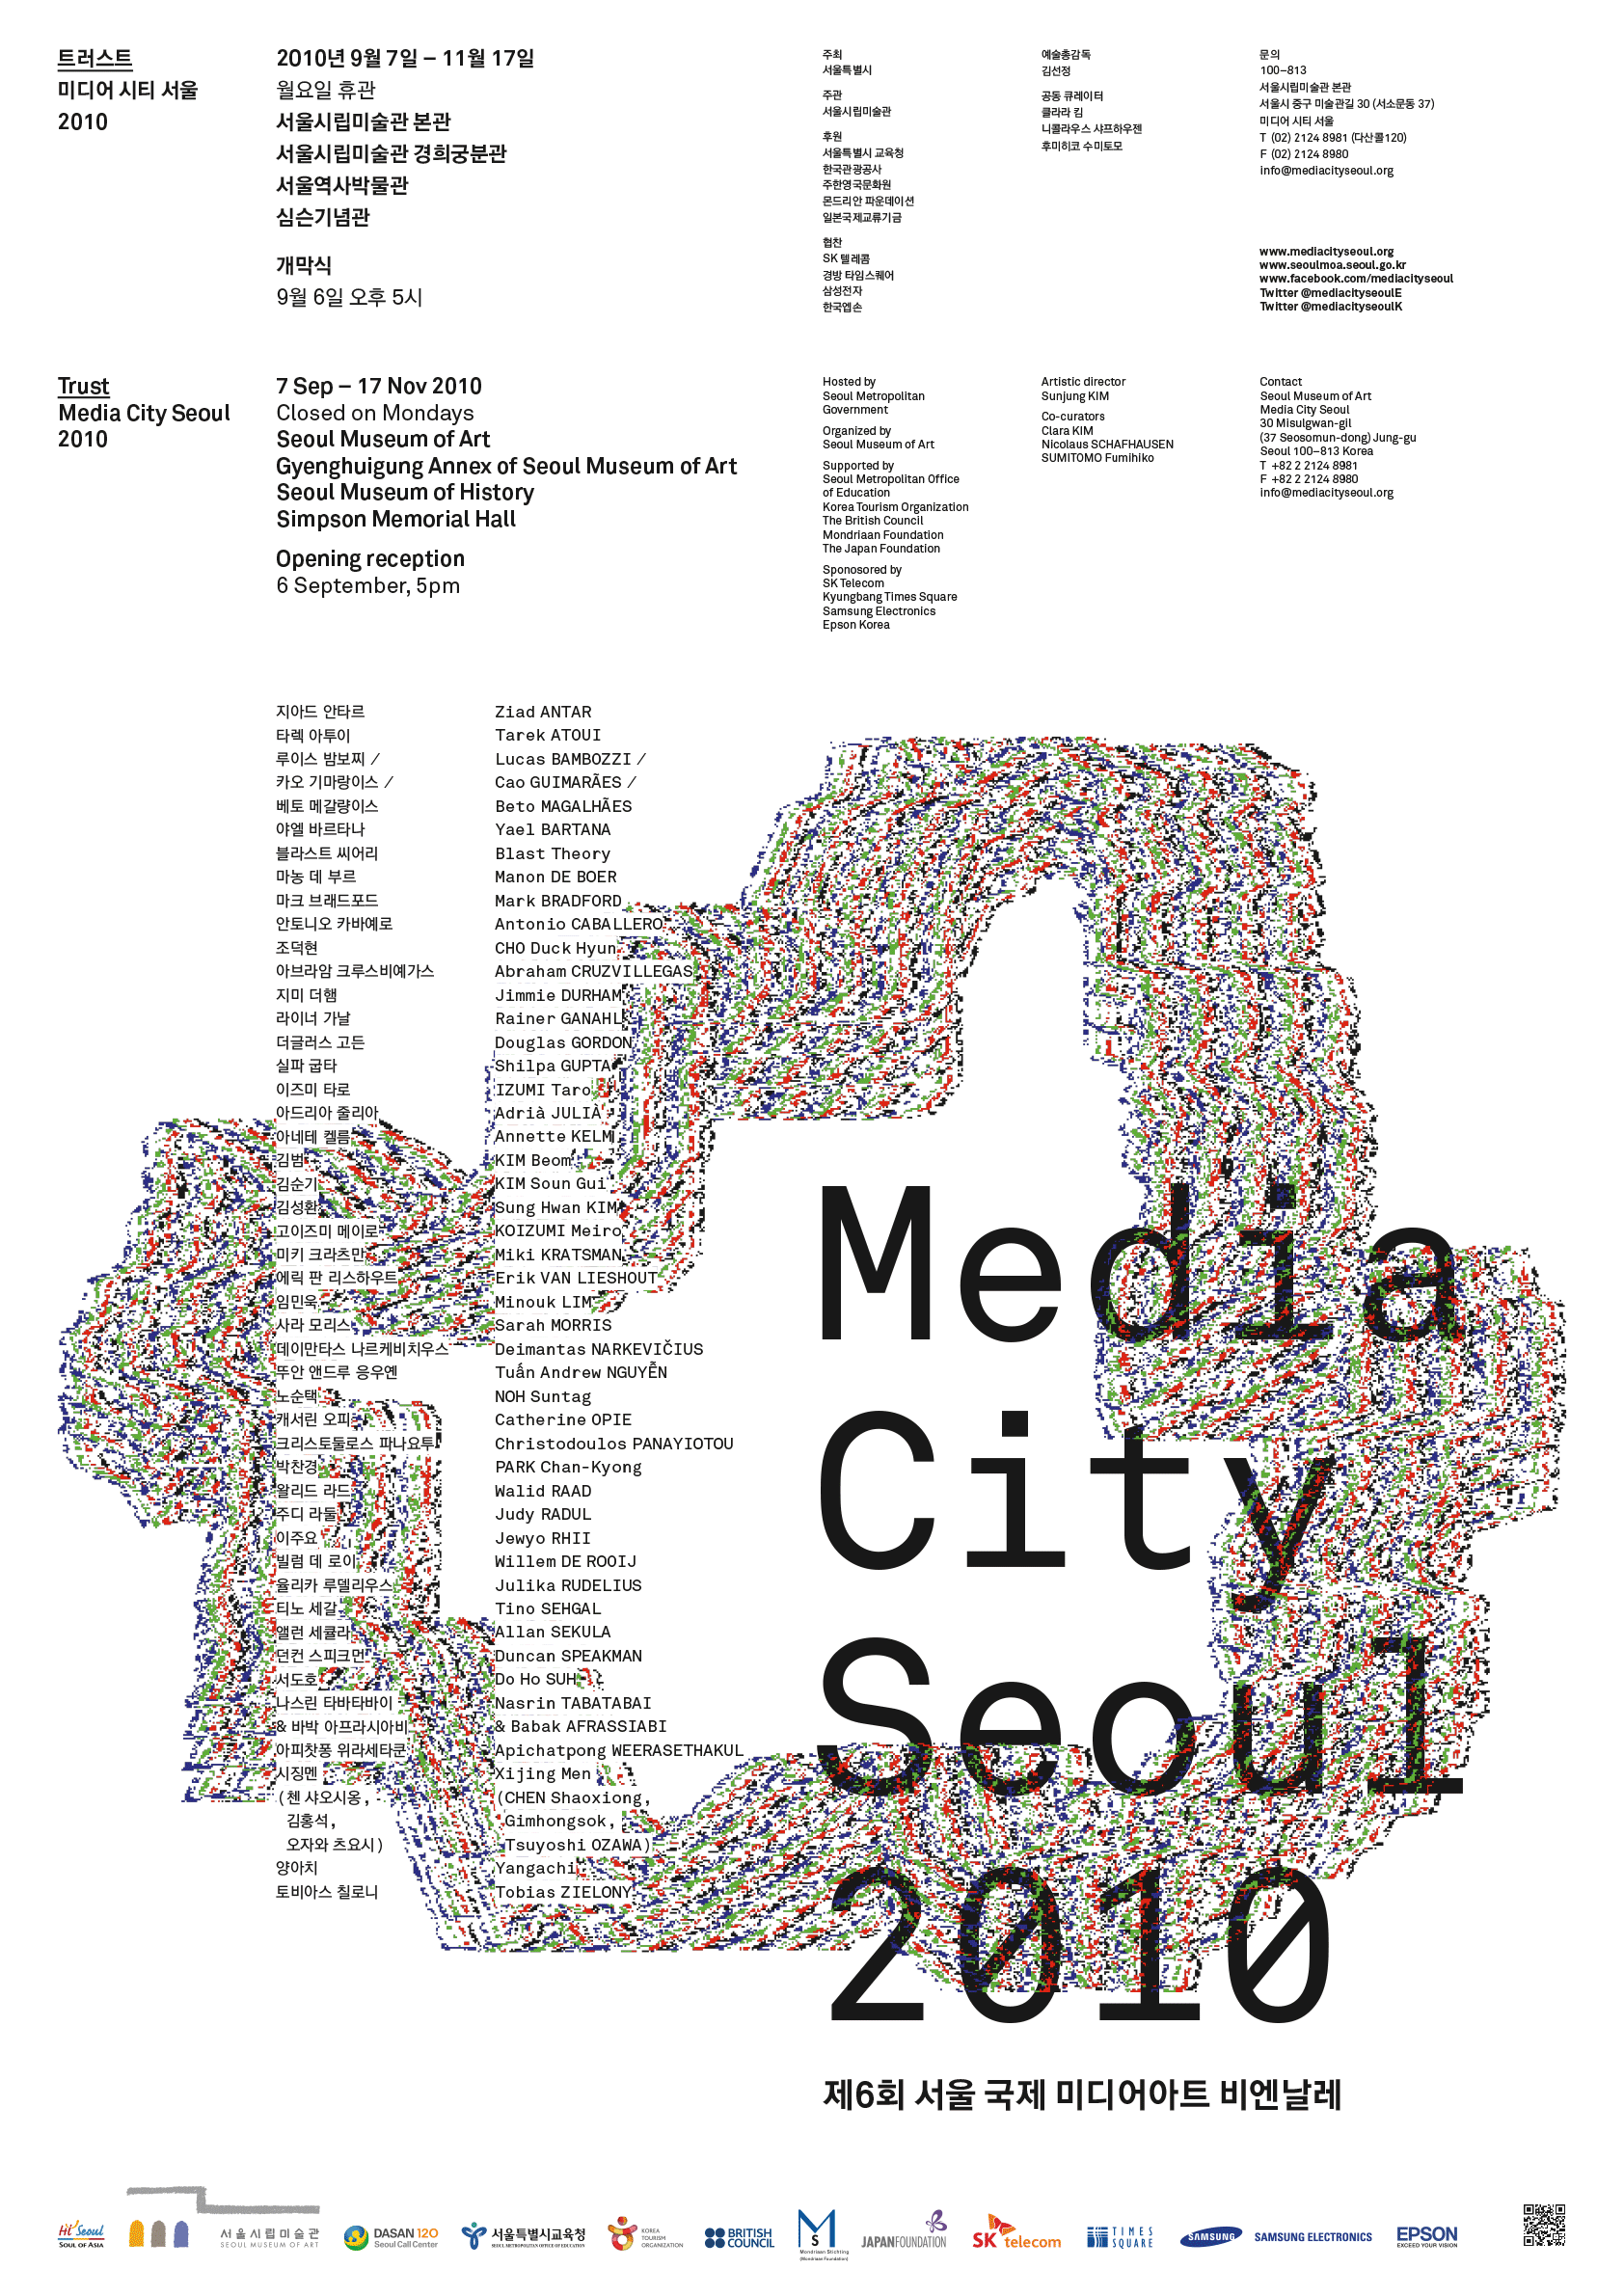 Media_City_2010_poster